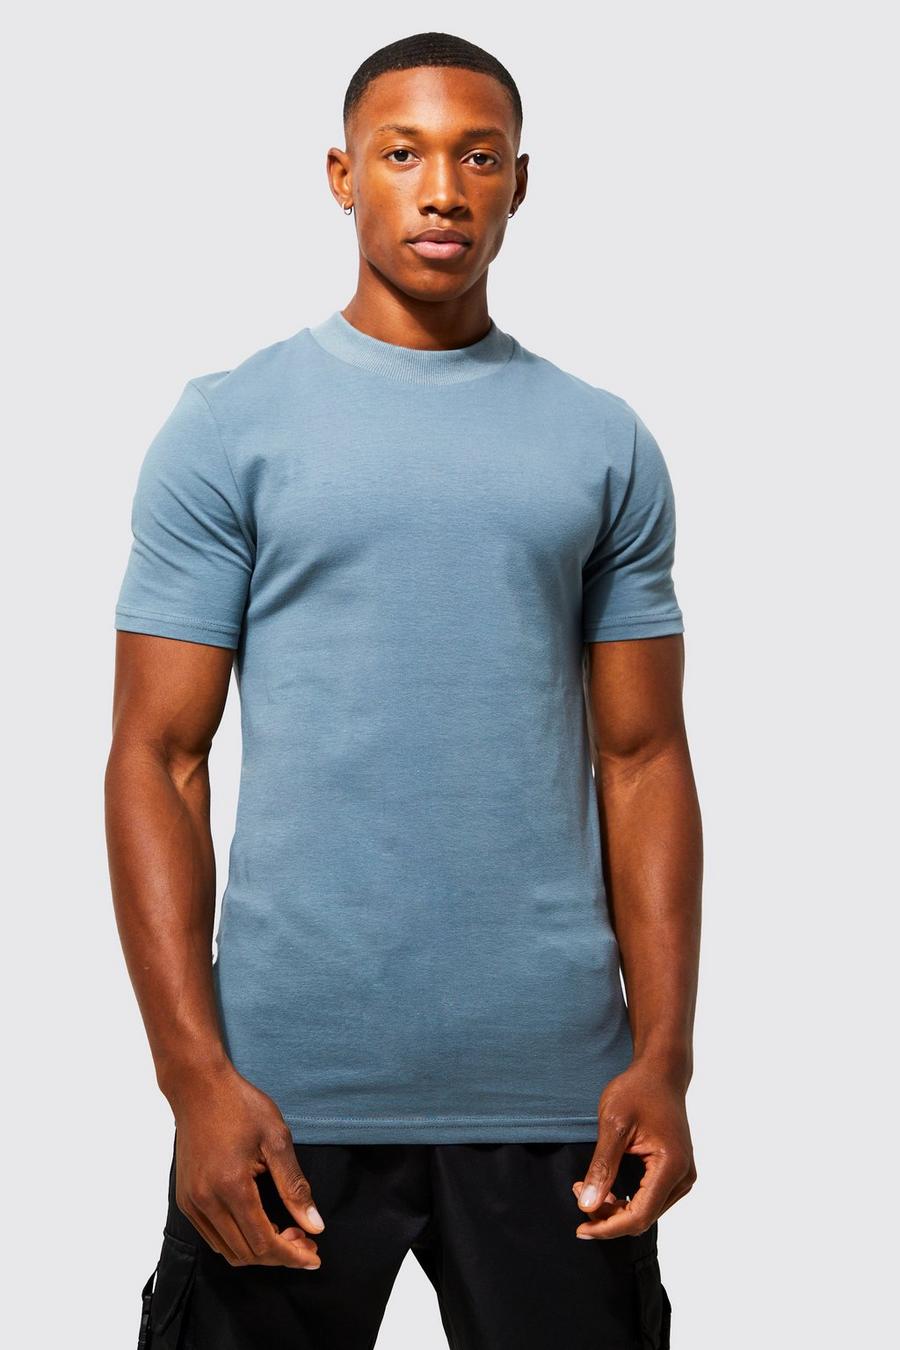 Camiseta con cuello extendido ajustada al músculo, Slate blue azul